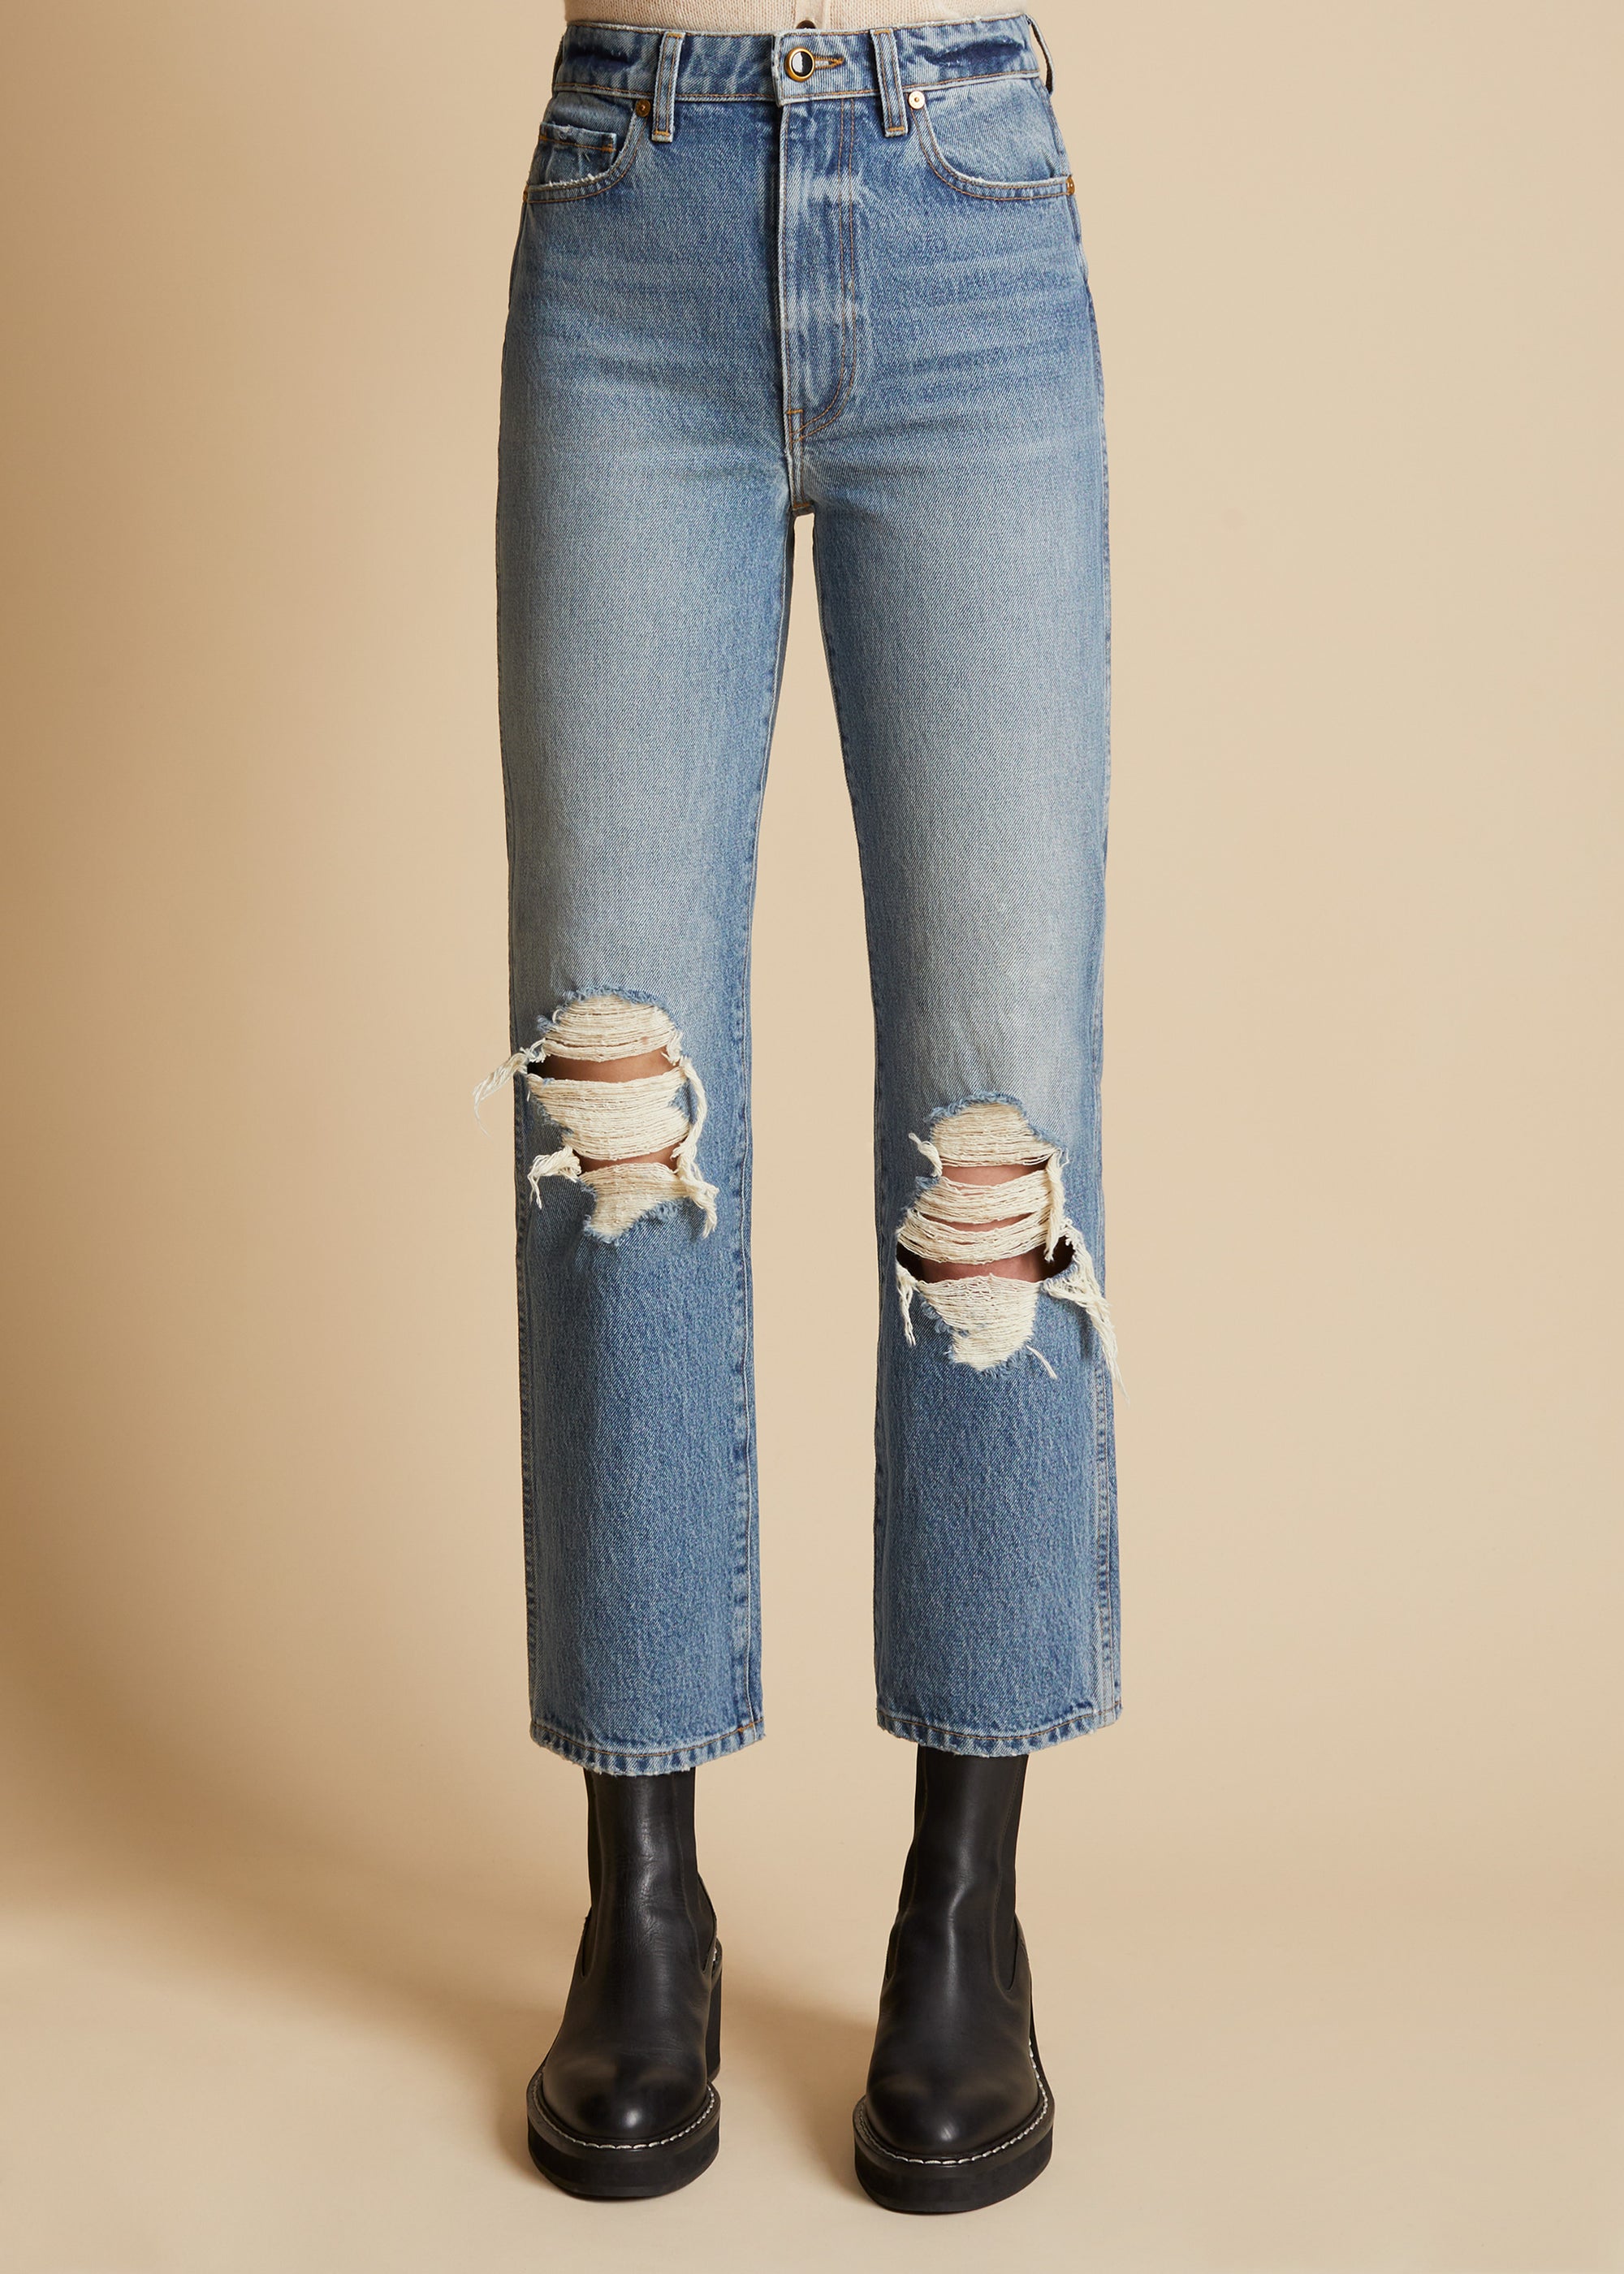 Abigail jeans - Portland